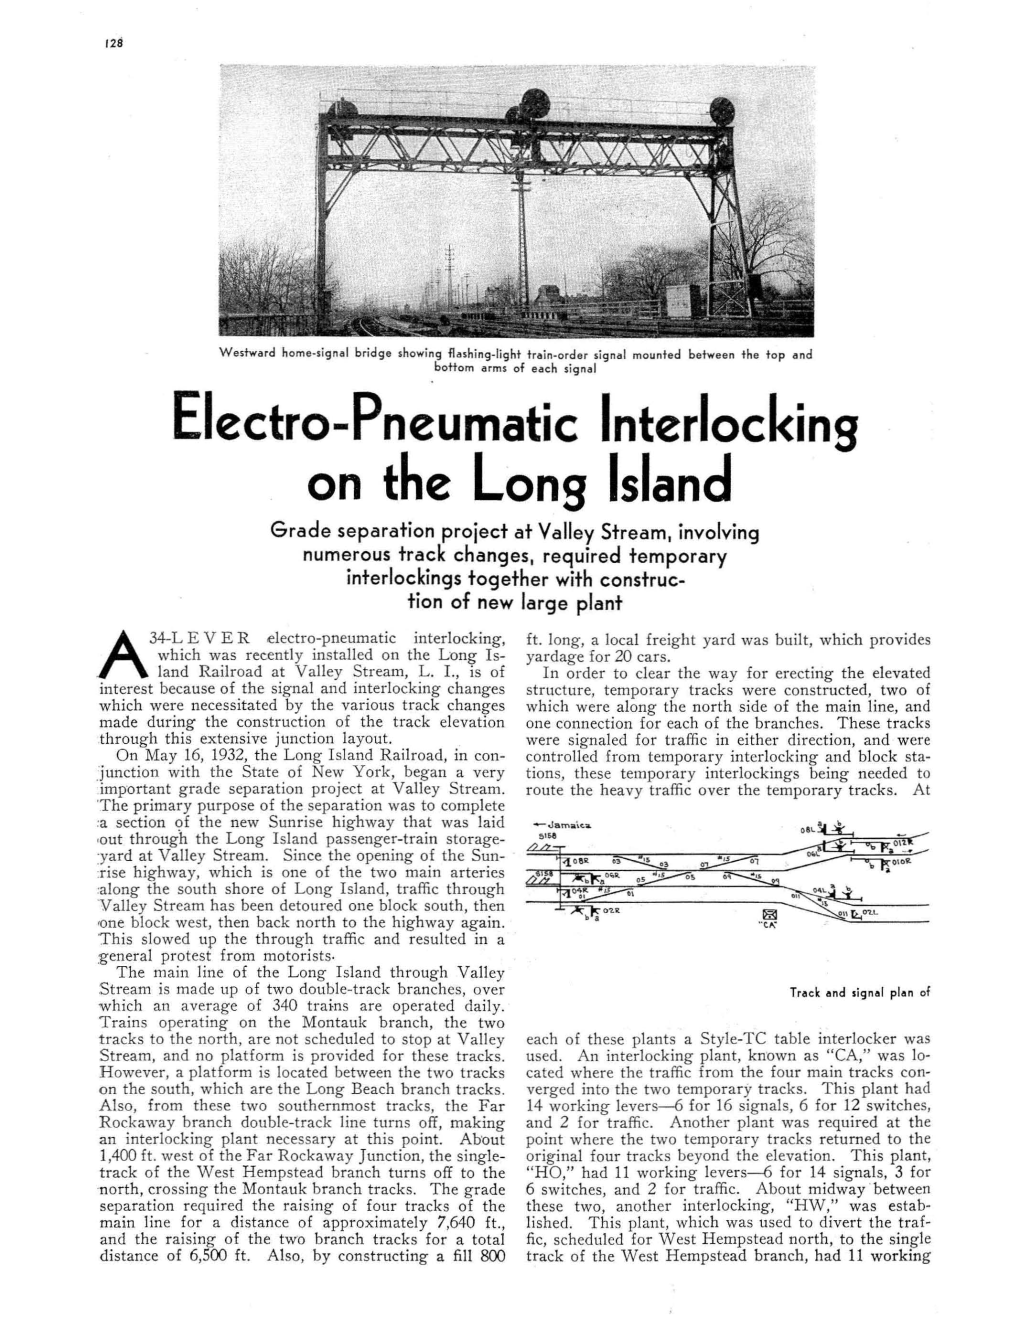 Electro-Pneumatic Interlocking on the Long Island